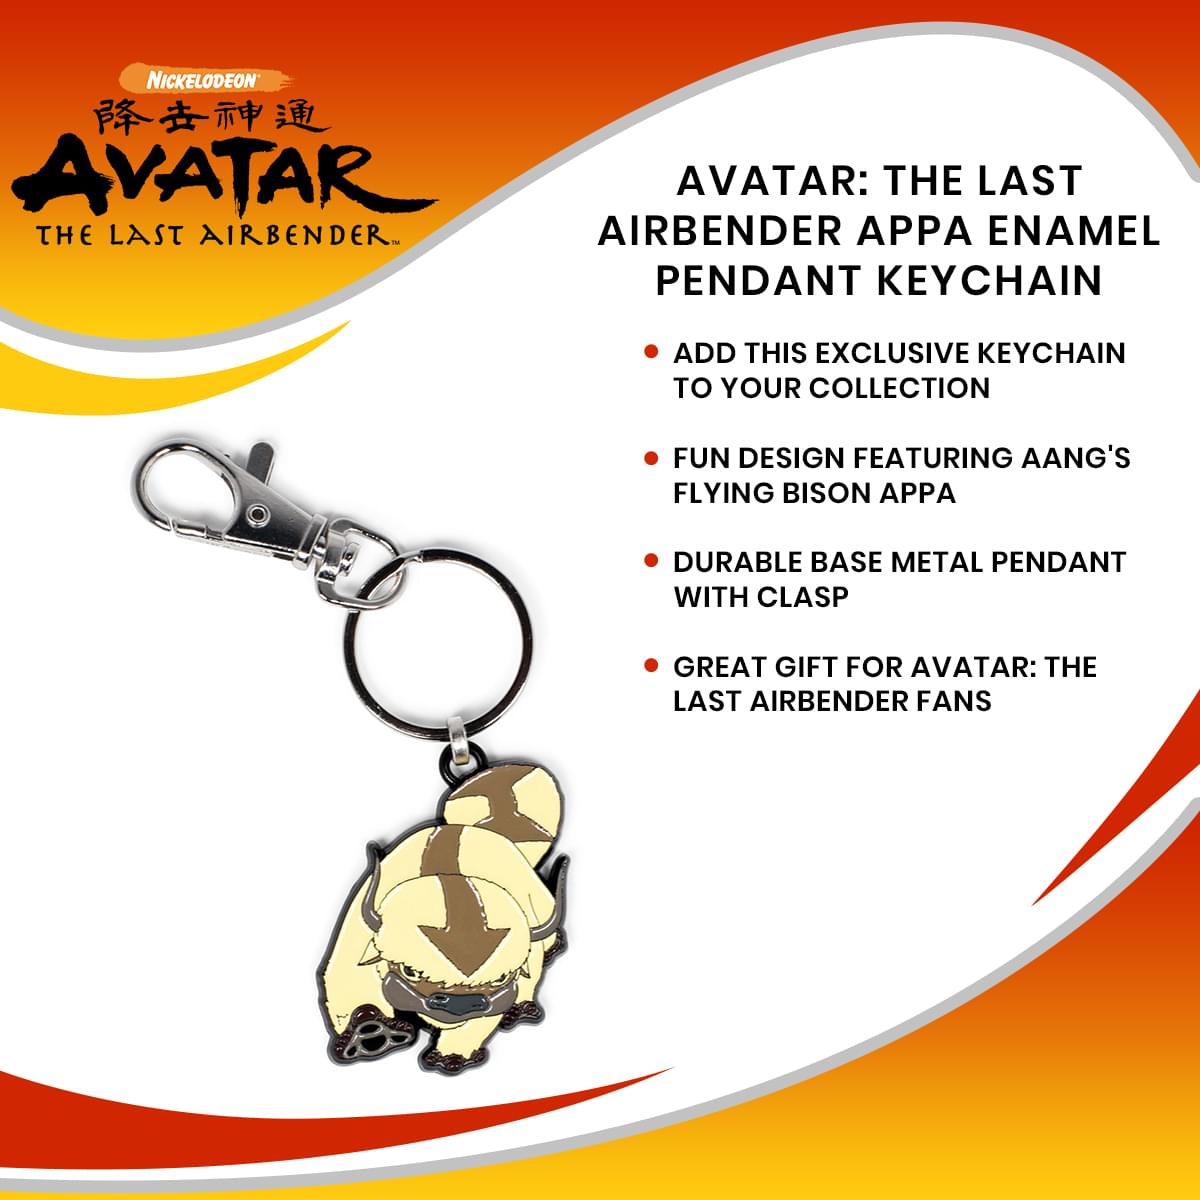 Avatar: The Last Airbender Appa Enamel Pendant Keychain